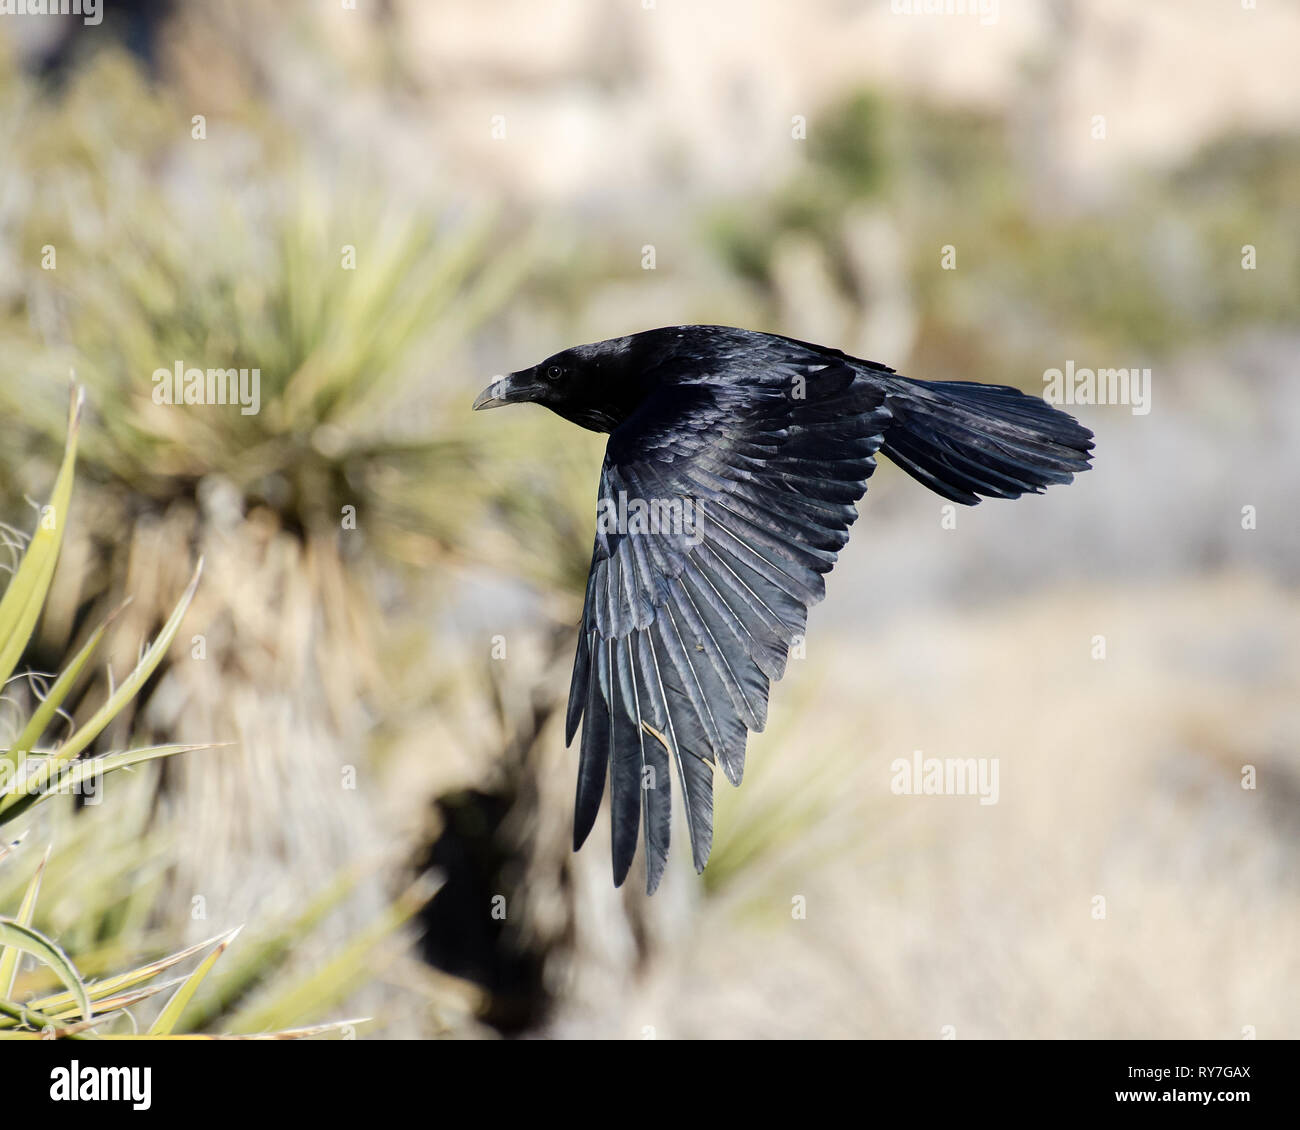 A Common Raven (Corvus corax) flies through Joshua Tree National Park in California. Stock Photo